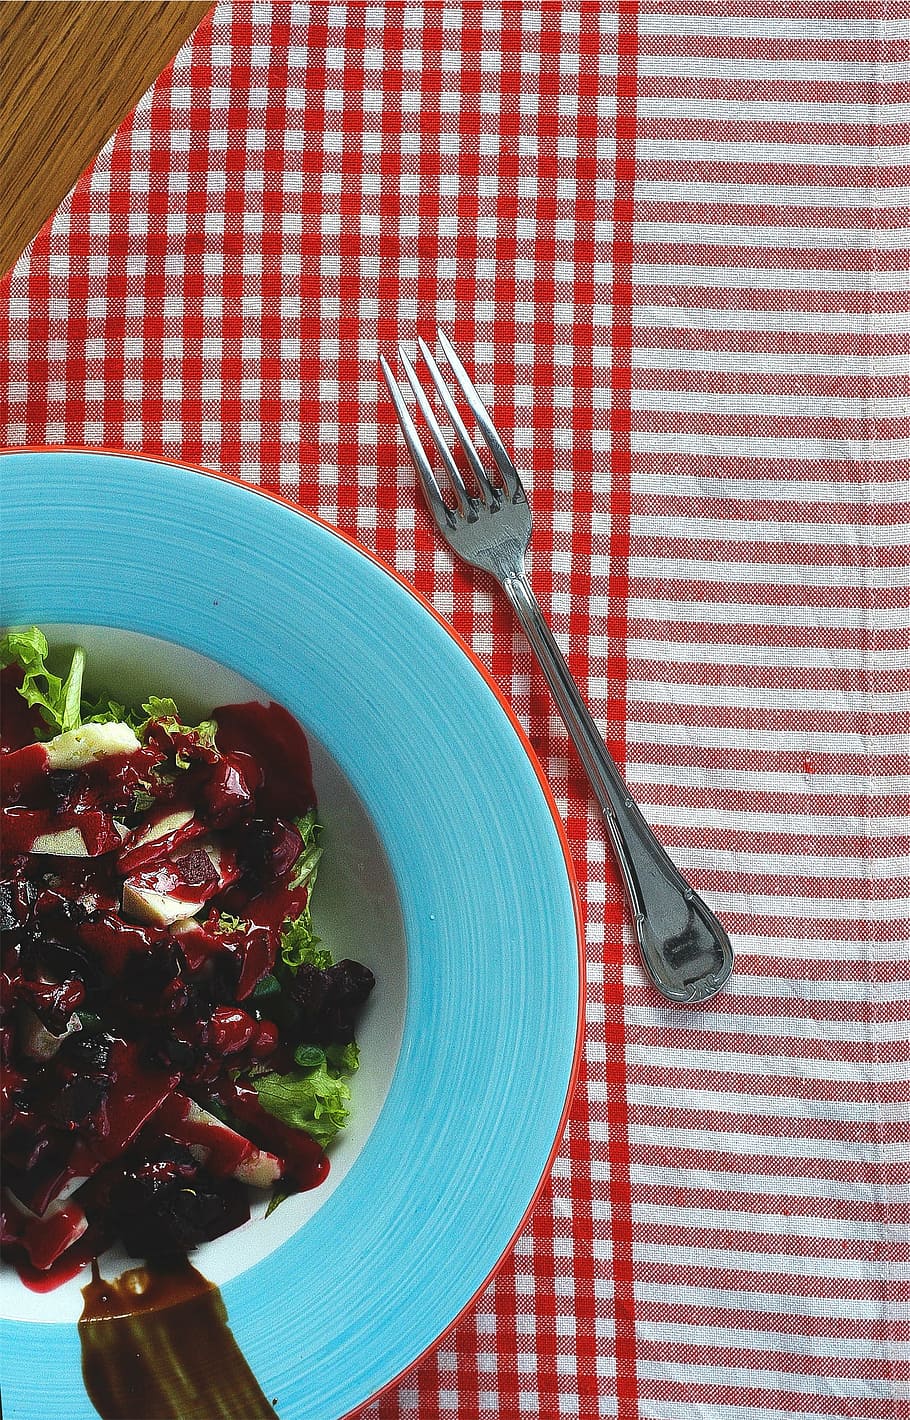 stainless, steel fork, plate, steel, fork, salad, lettuce, food, healthy, table cloth